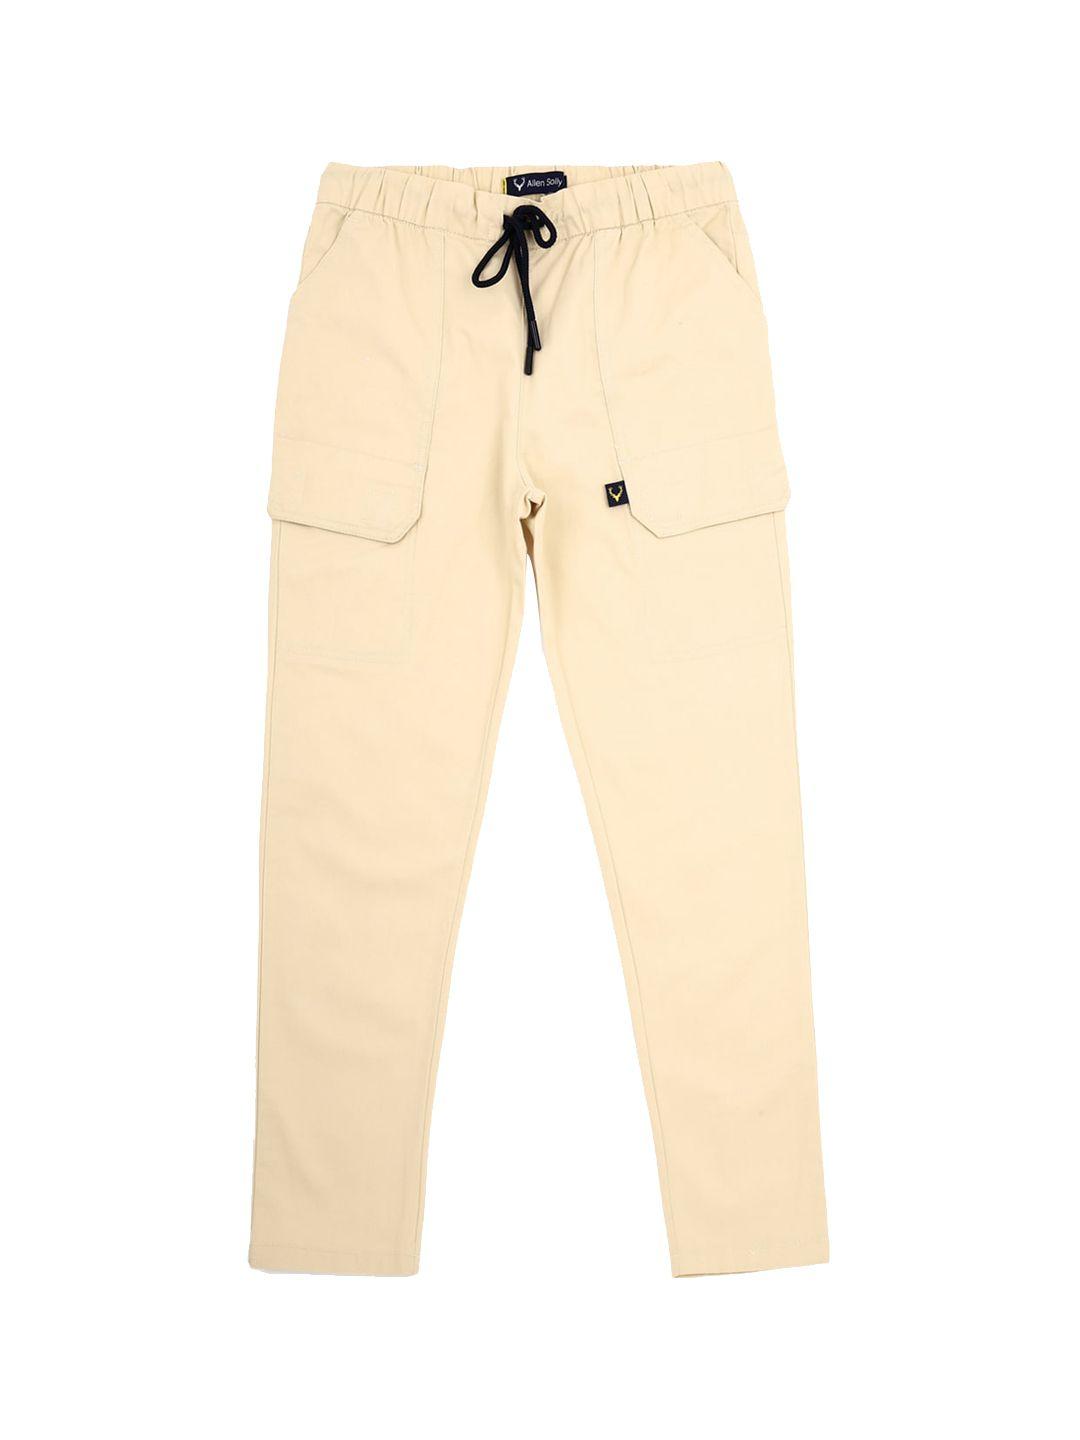 allen-solly-junior-boys-cream-coloured-trousers